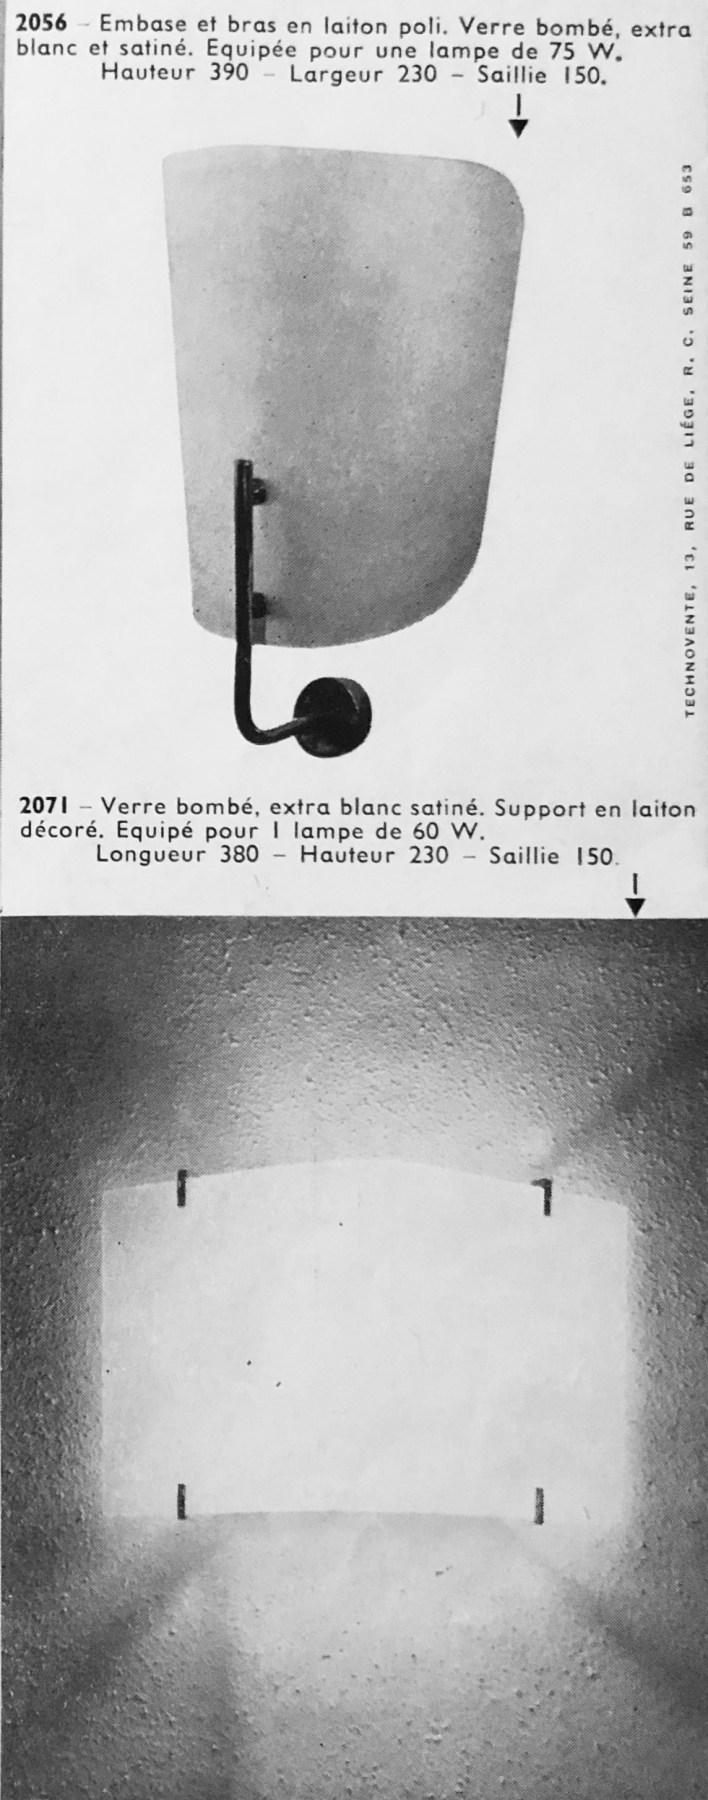 Disderot Catalogue, 1959